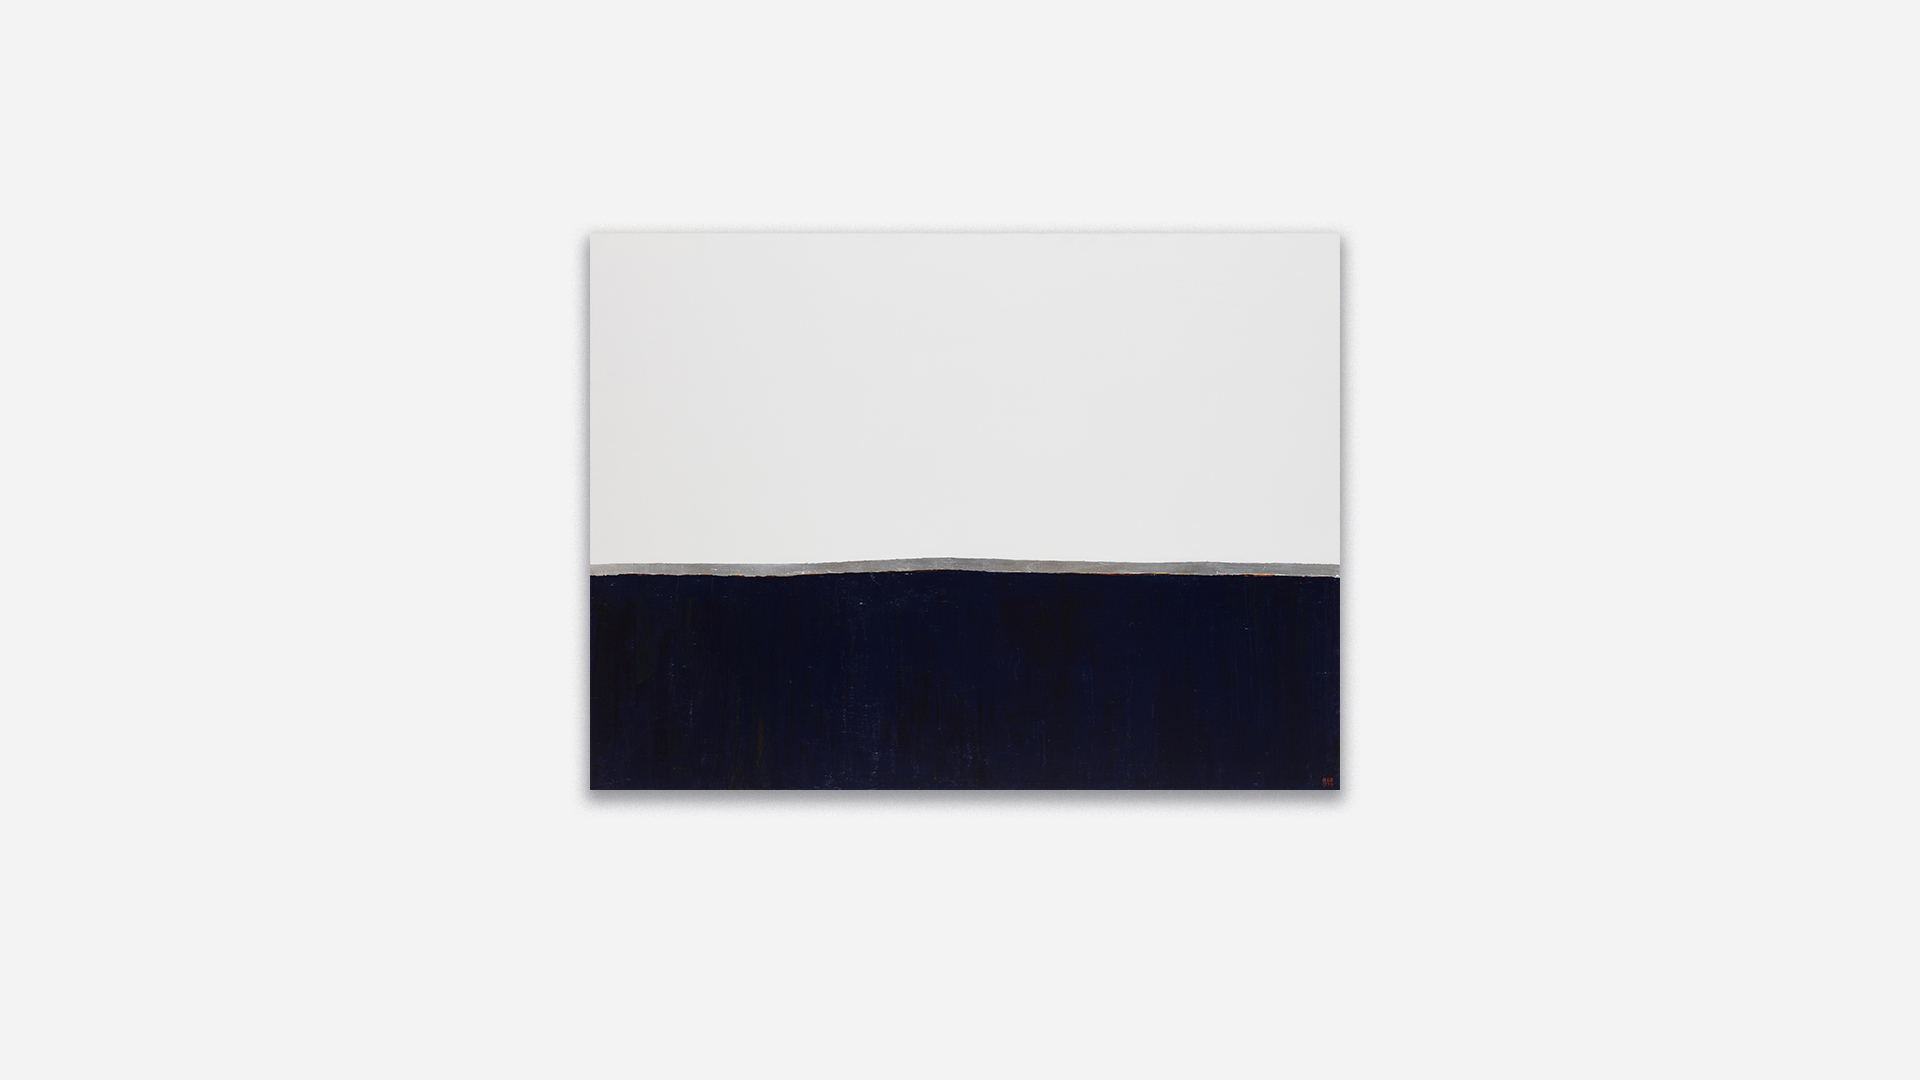 Anna-Eva Bergman, N°1-1974 Horizon bleu et ciel blanc, 1974, Acrylic and meta leaf on canvas, 97 x 130 cm